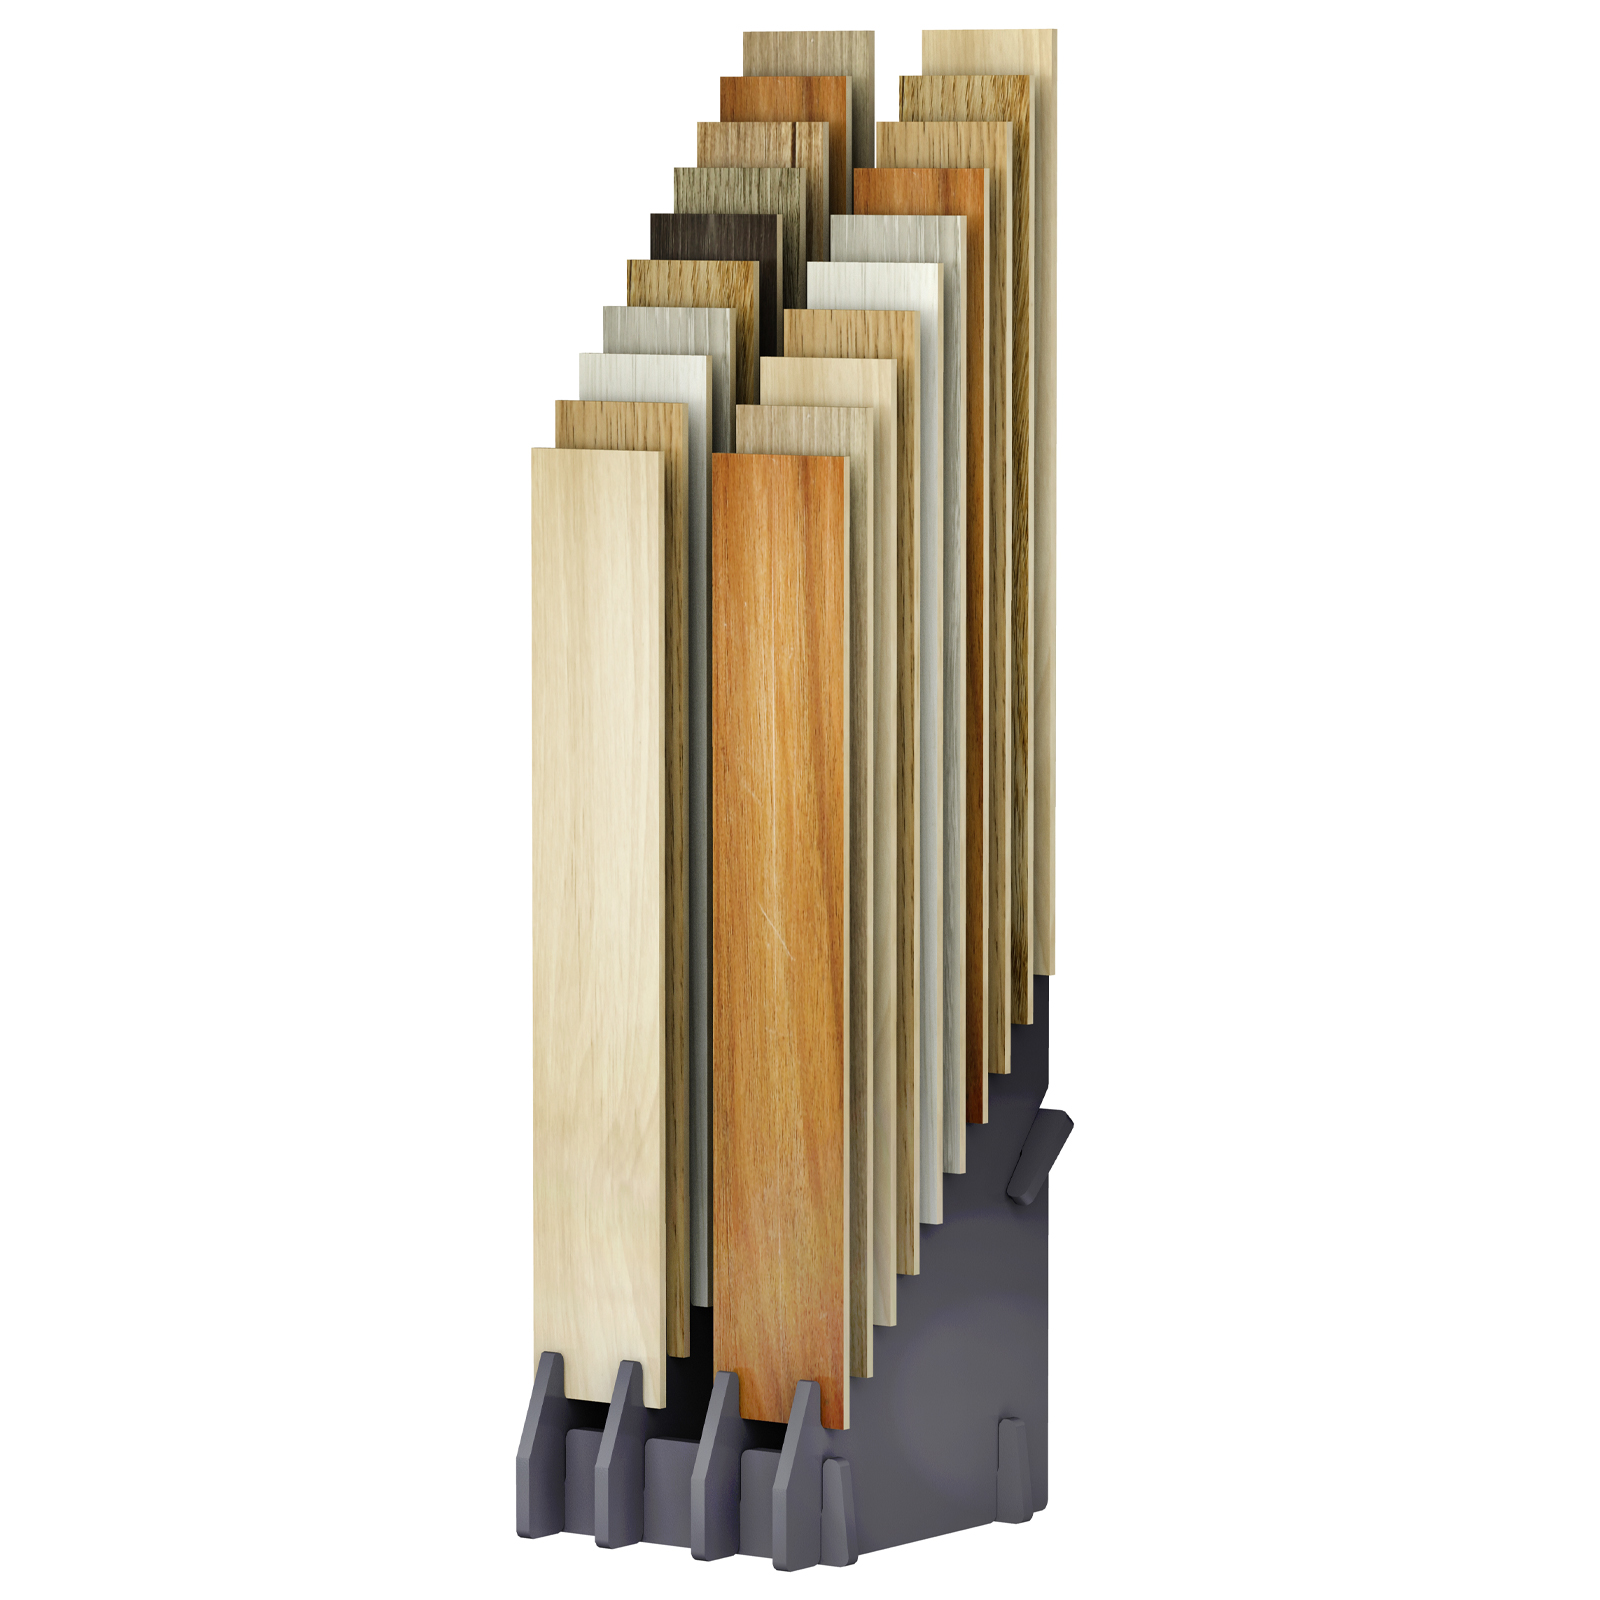 Double Ten Waterfall Flooring Showroom Displays Hardwood Plank Laminate Bamboo Reclaimed Wood Samples McColl Display